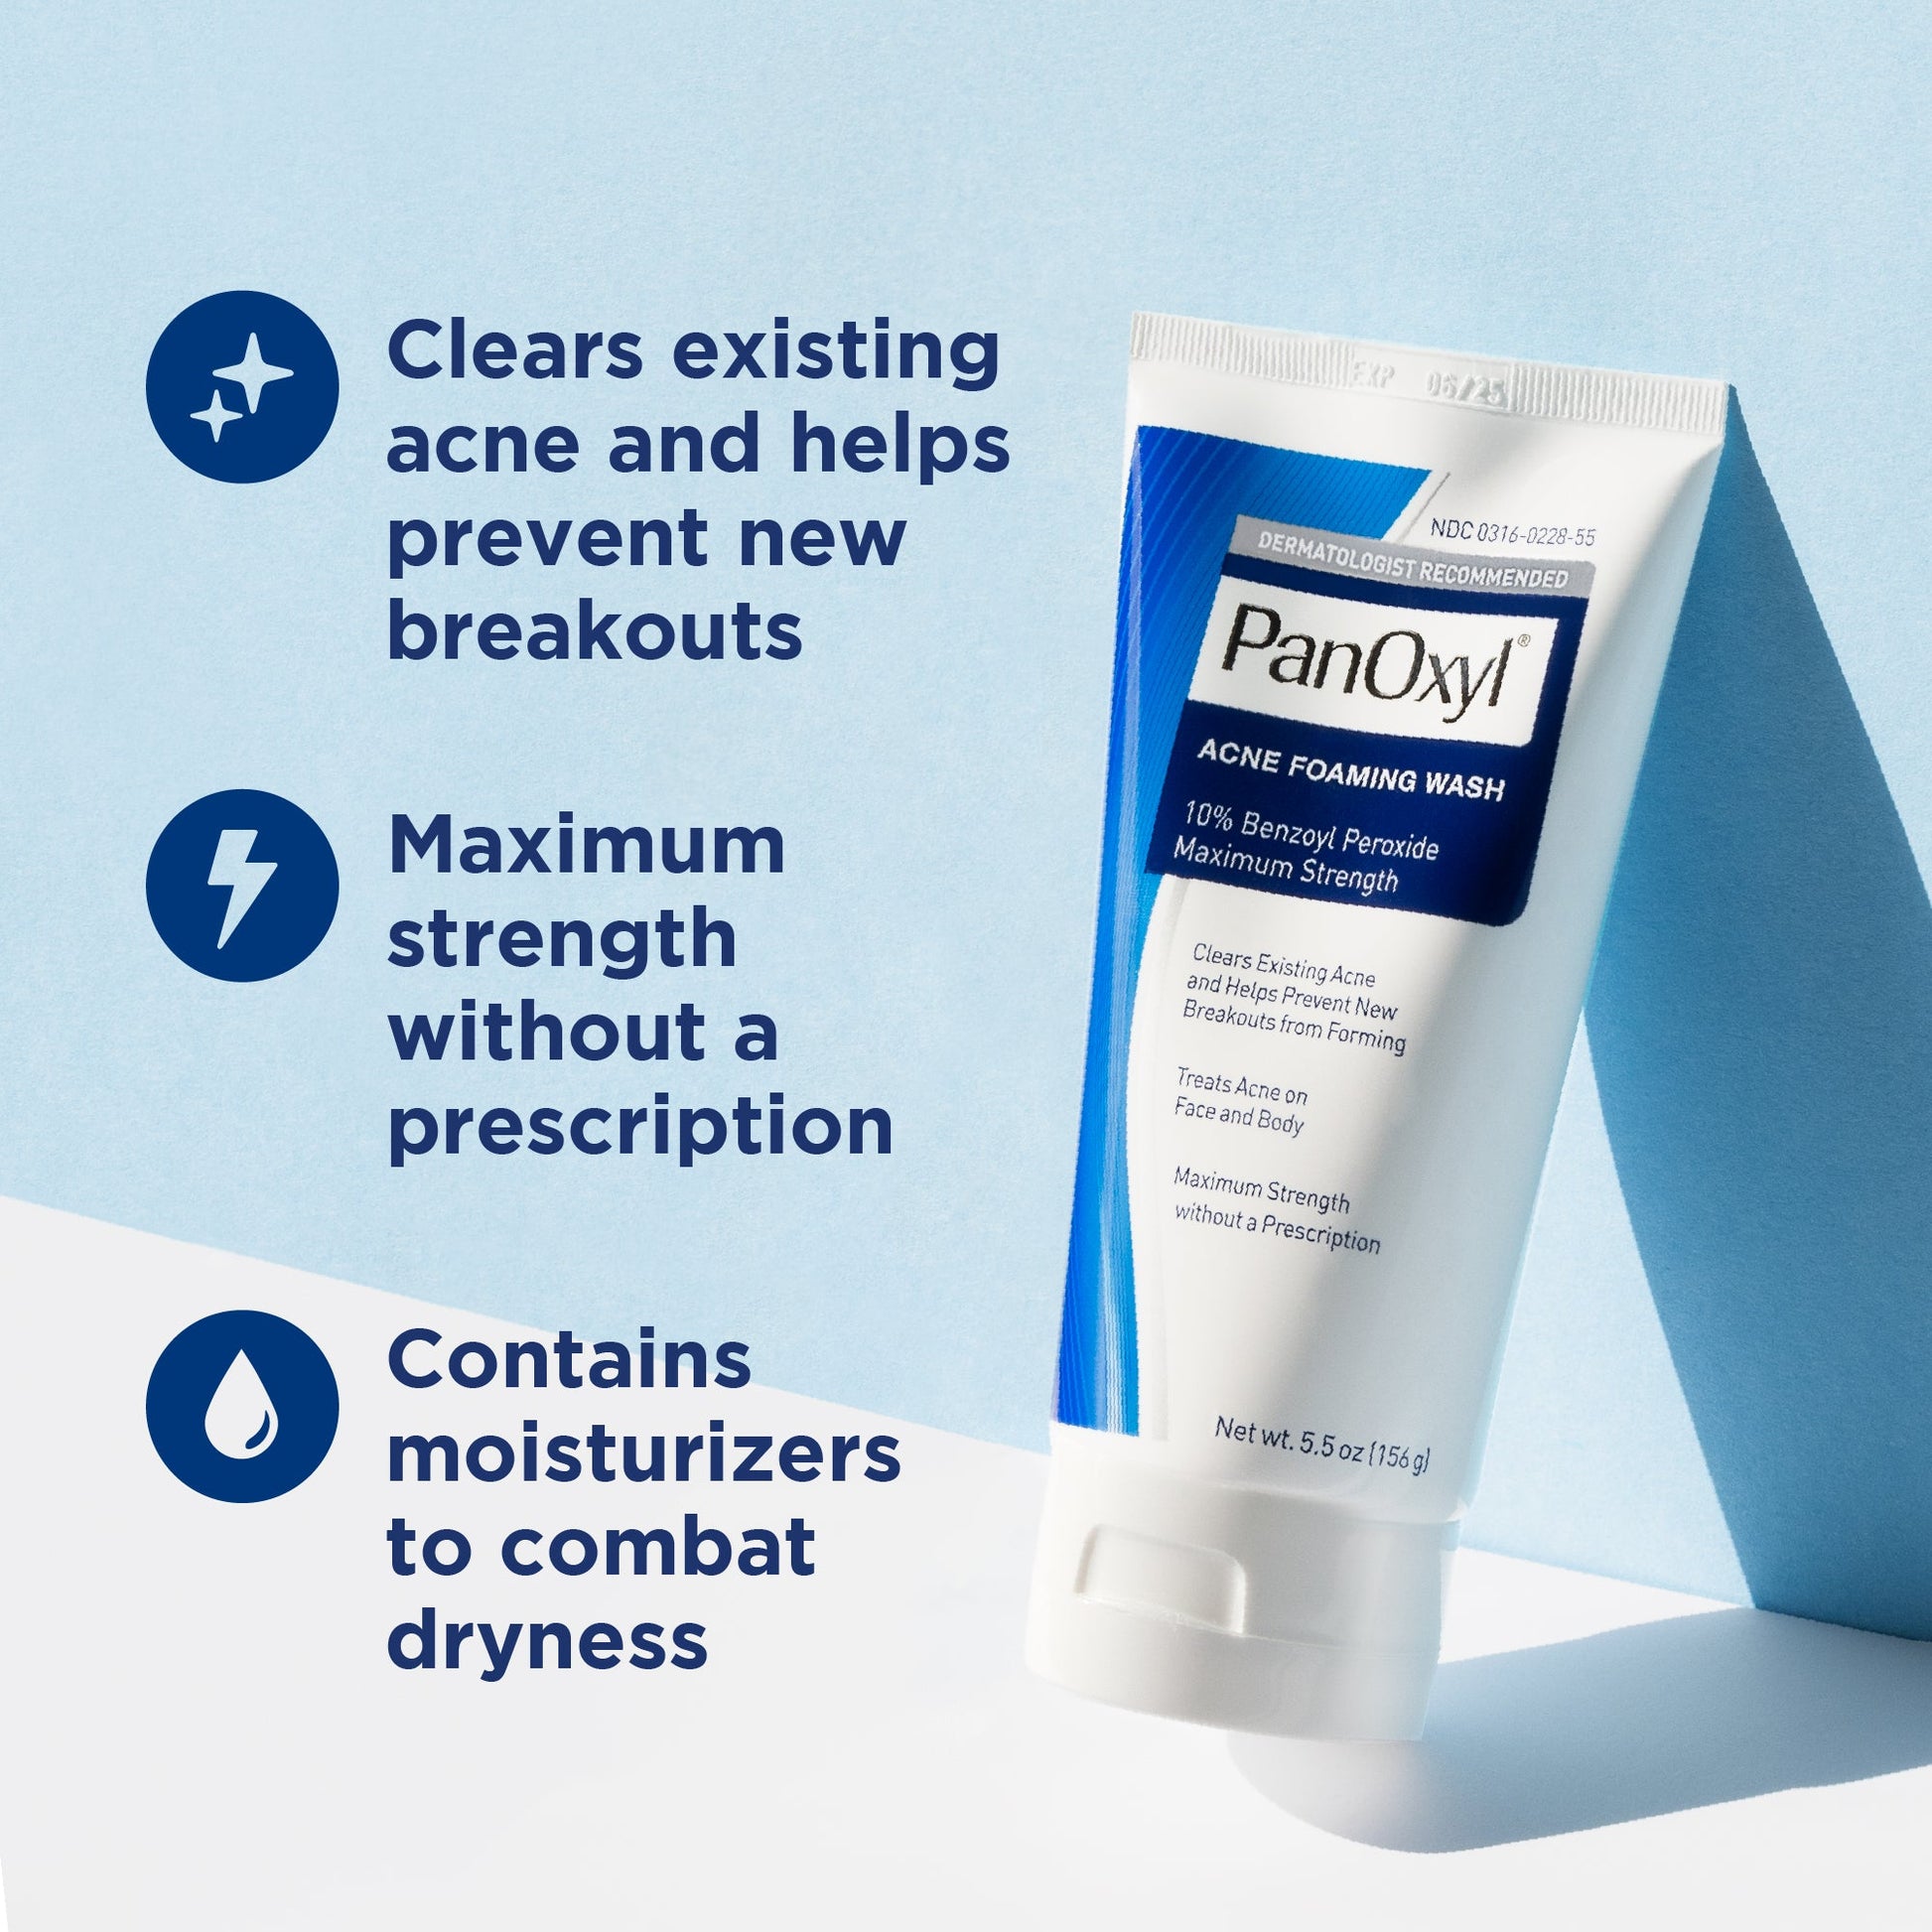 Panoxyl acne foaming wash benzoyl peroxide 10% - Buy Now Pakistan